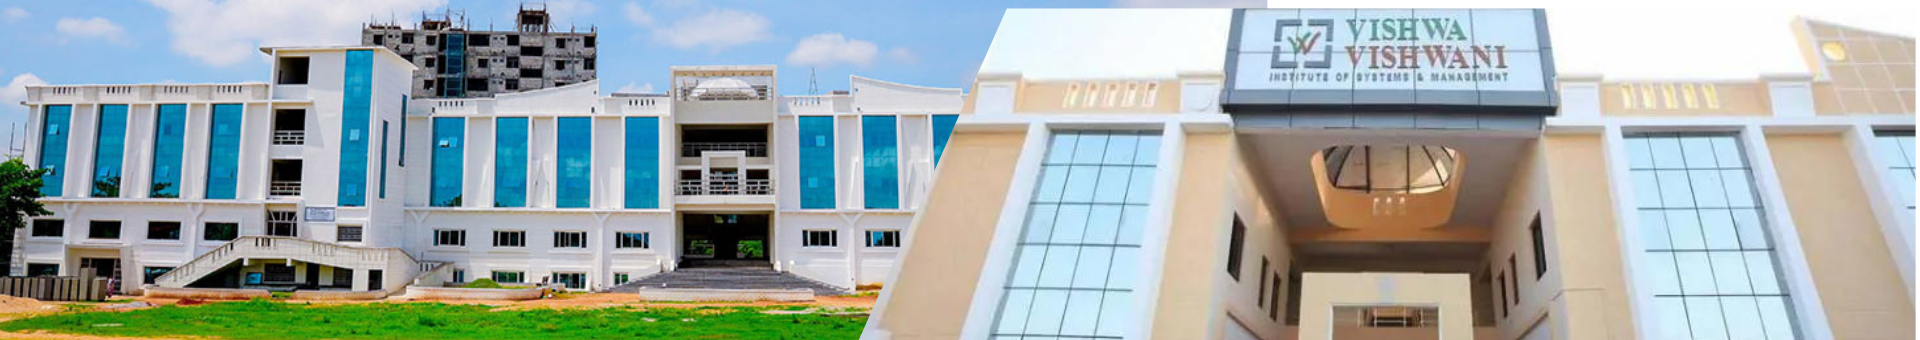 Vishwa Vishwani Institute of Systems and Management , Hyderabad